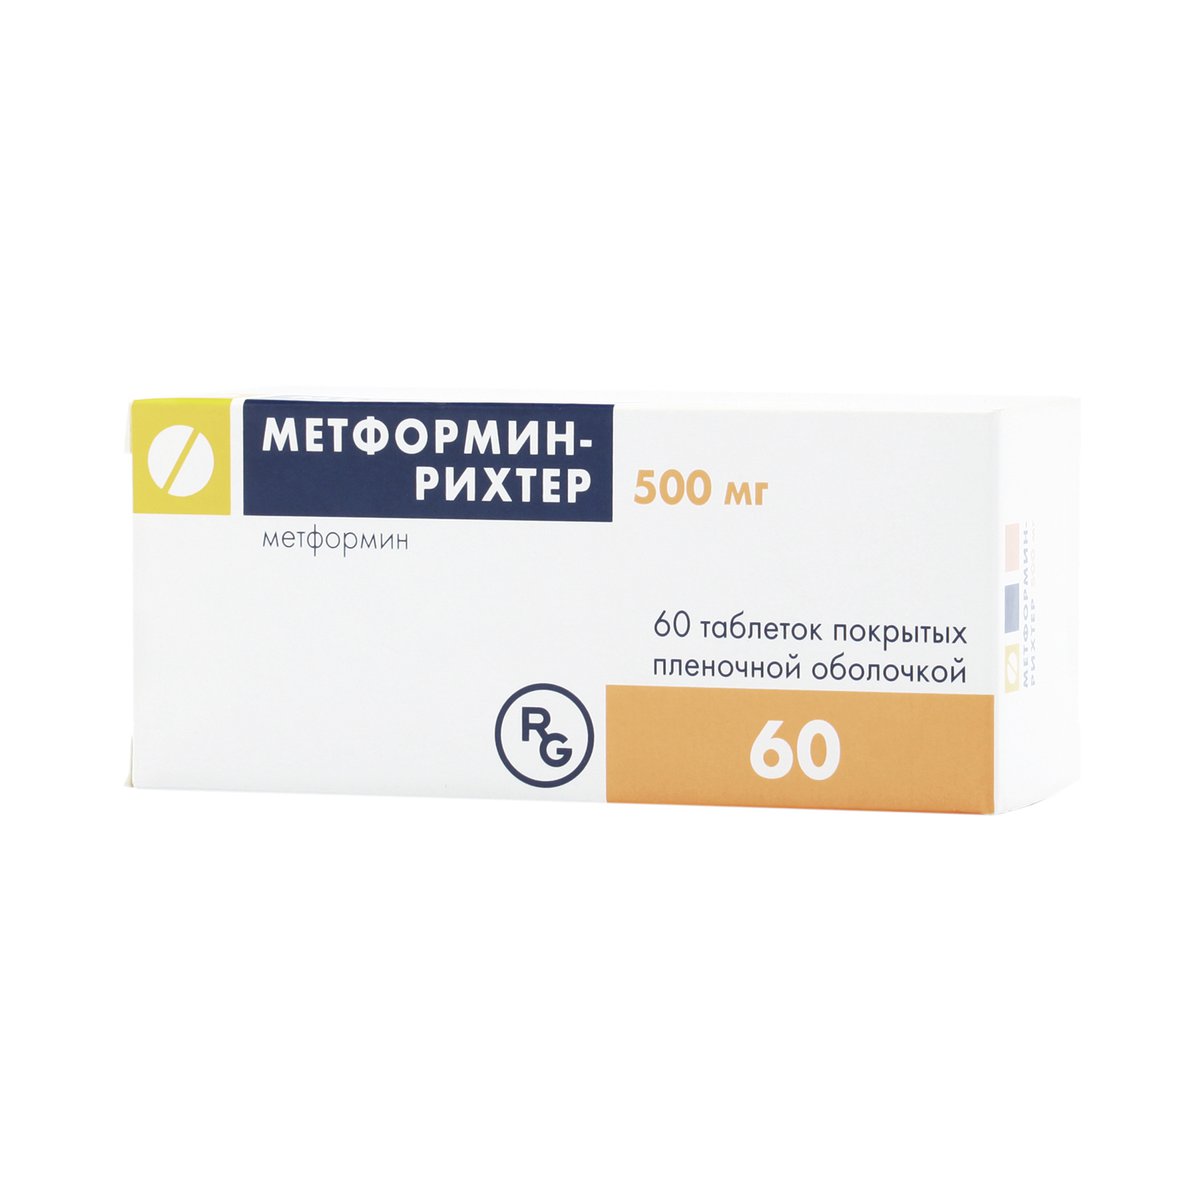 Метформин-рихтер (таблетки, 60 шт, 500 мг) - цена,  онлайн в .